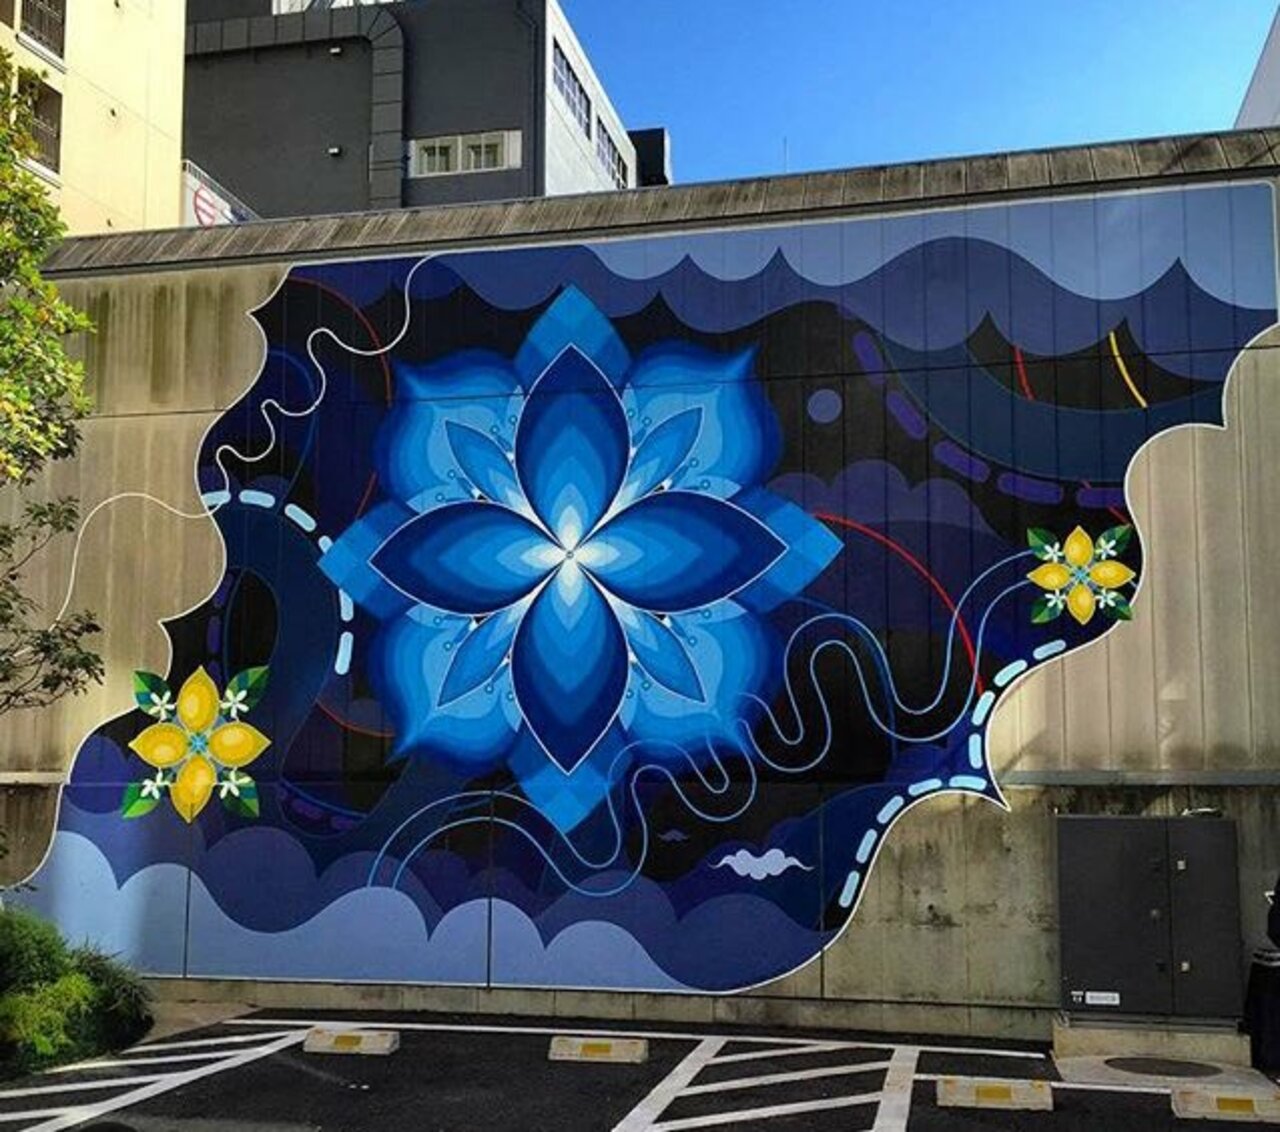 New Street Art by htzk, kami_htzk + sasu_lyri 

#art #graffiti #mural #streetart https://t.co/rVi2PrcTWg